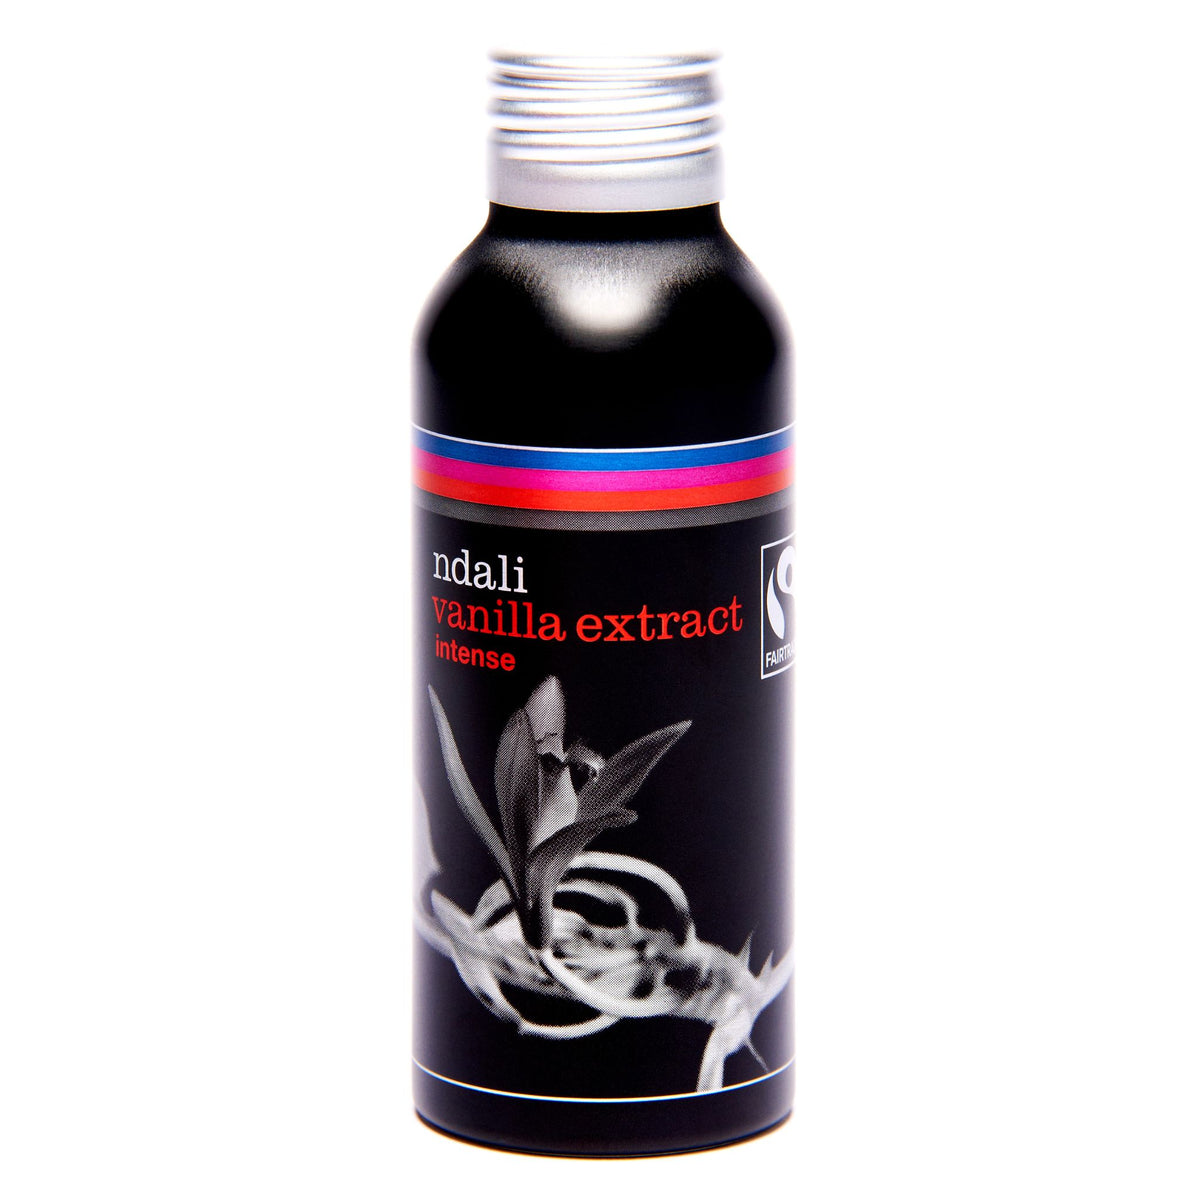 Ndali Vanilla Extract Intense - 100ml